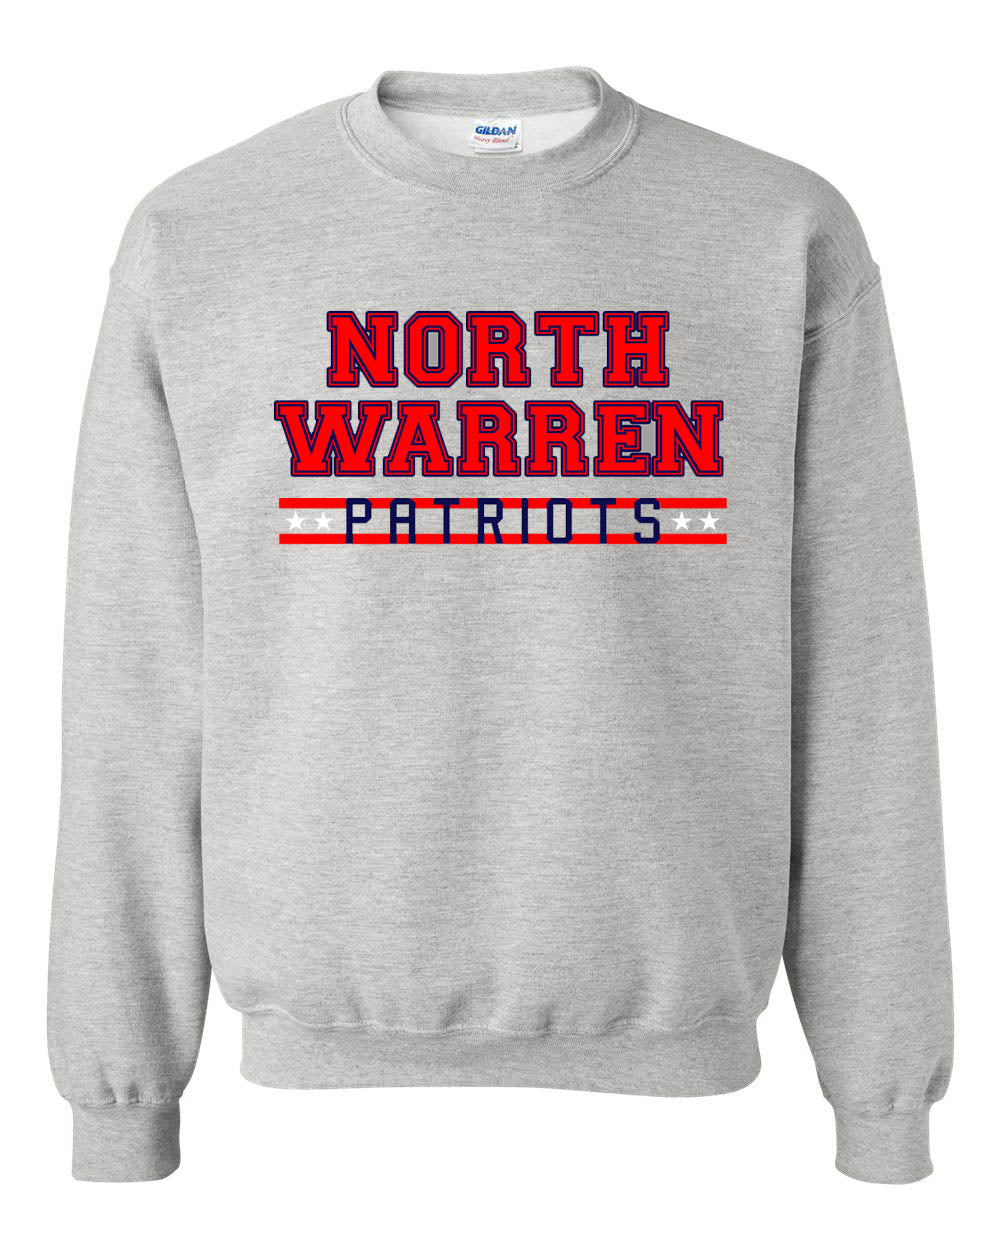 NWRHS Patriots non hooded sweatshirt